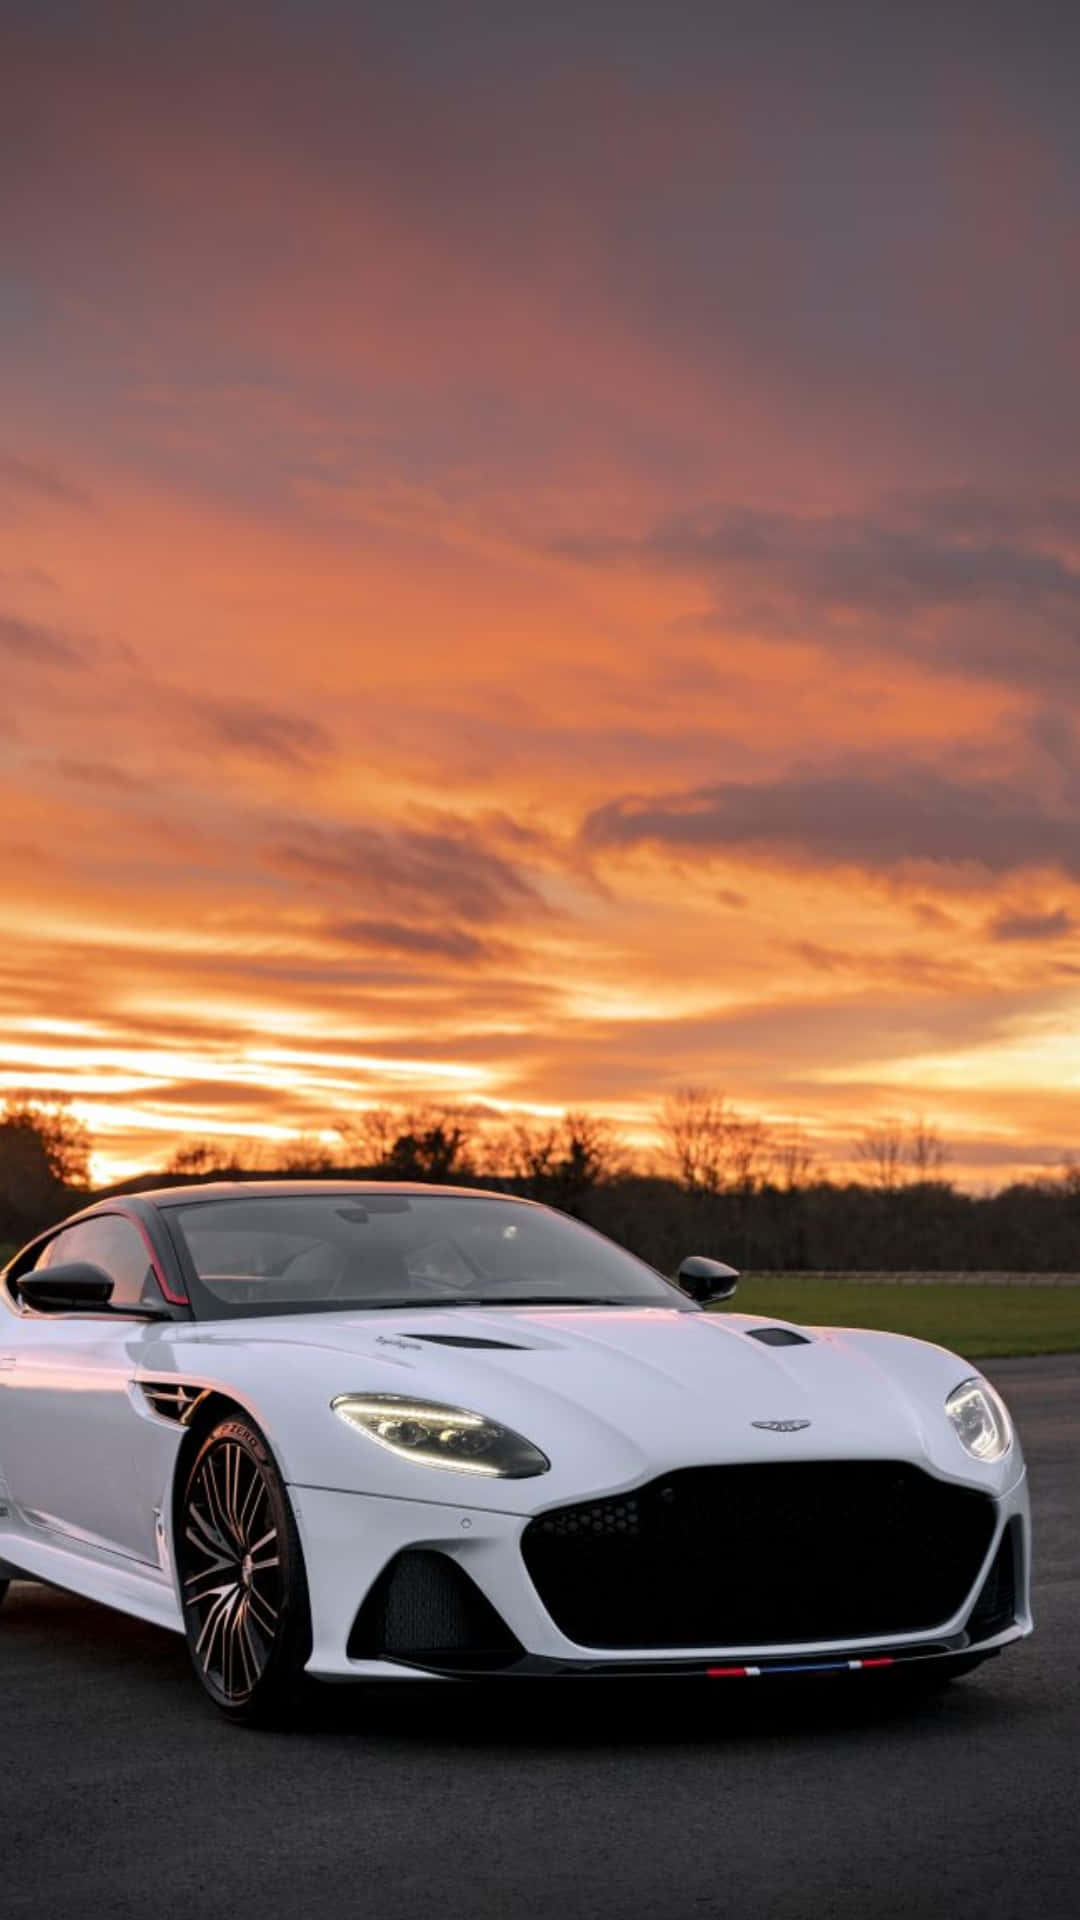 Aston Martin DBS Superleggera sleek and powerful design Wallpaper